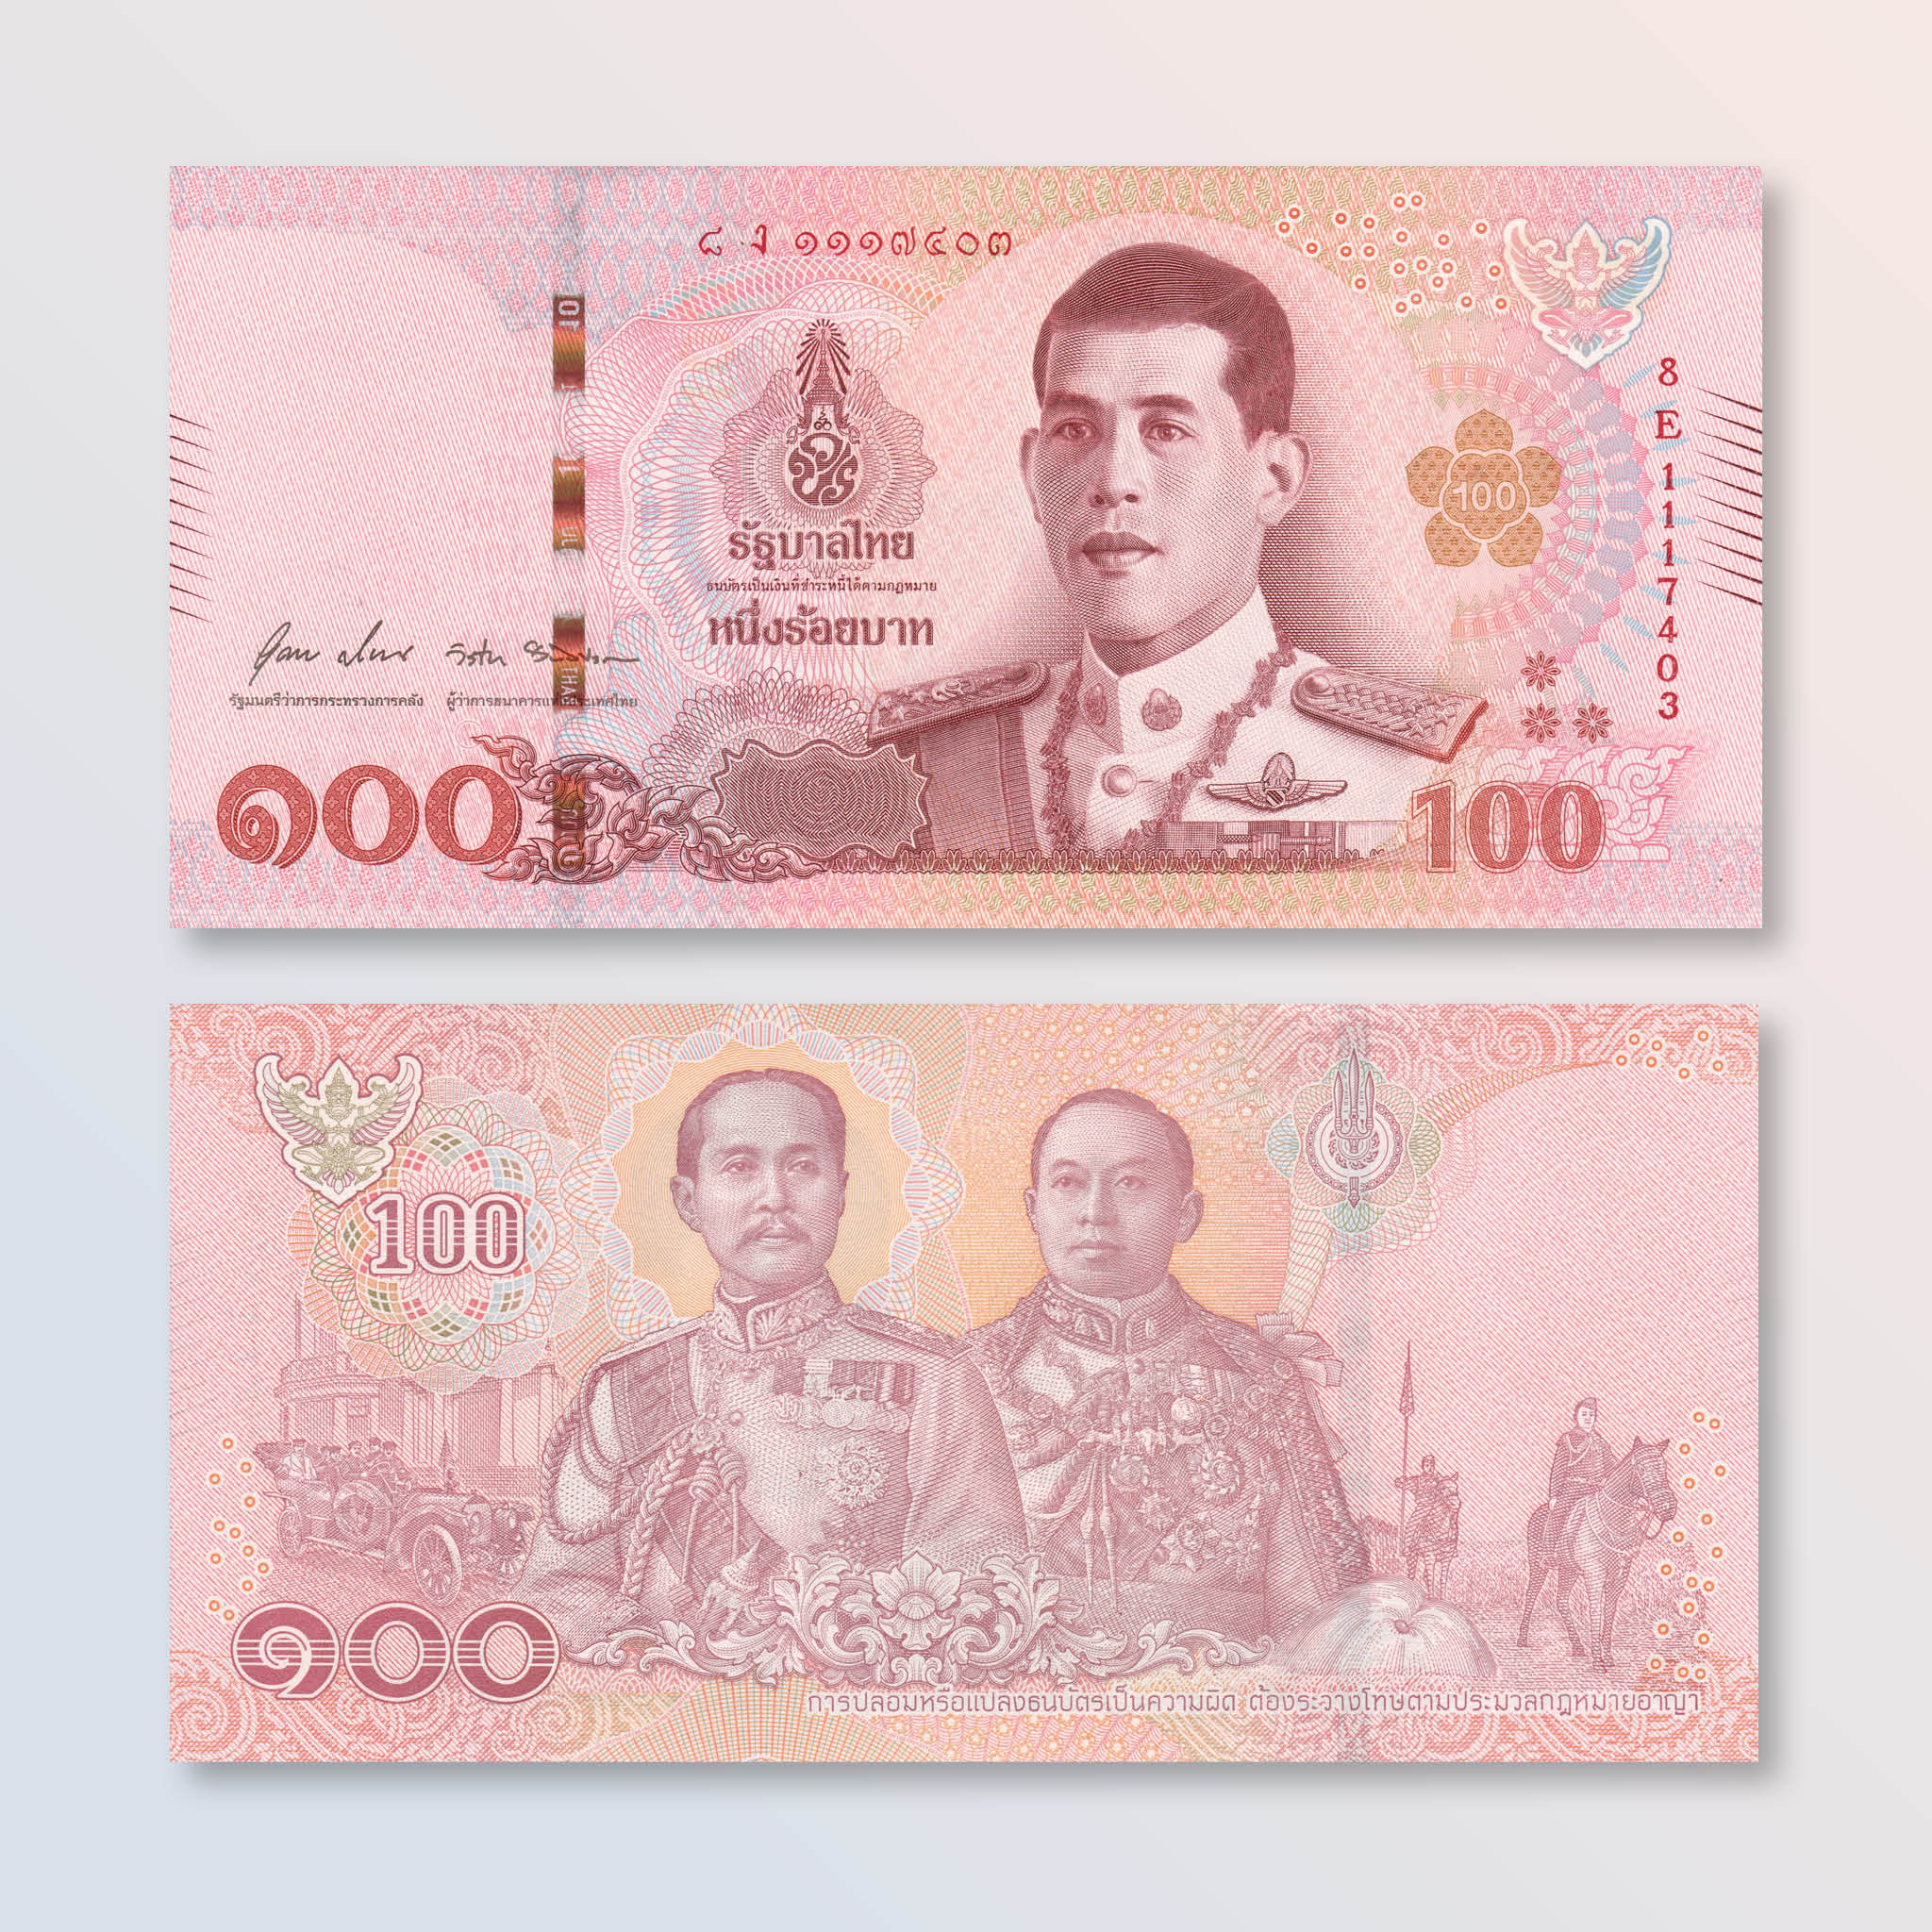 Thailand 100 Baht, 2018, B195c, P137b, UNC - Robert's World Money - World Banknotes